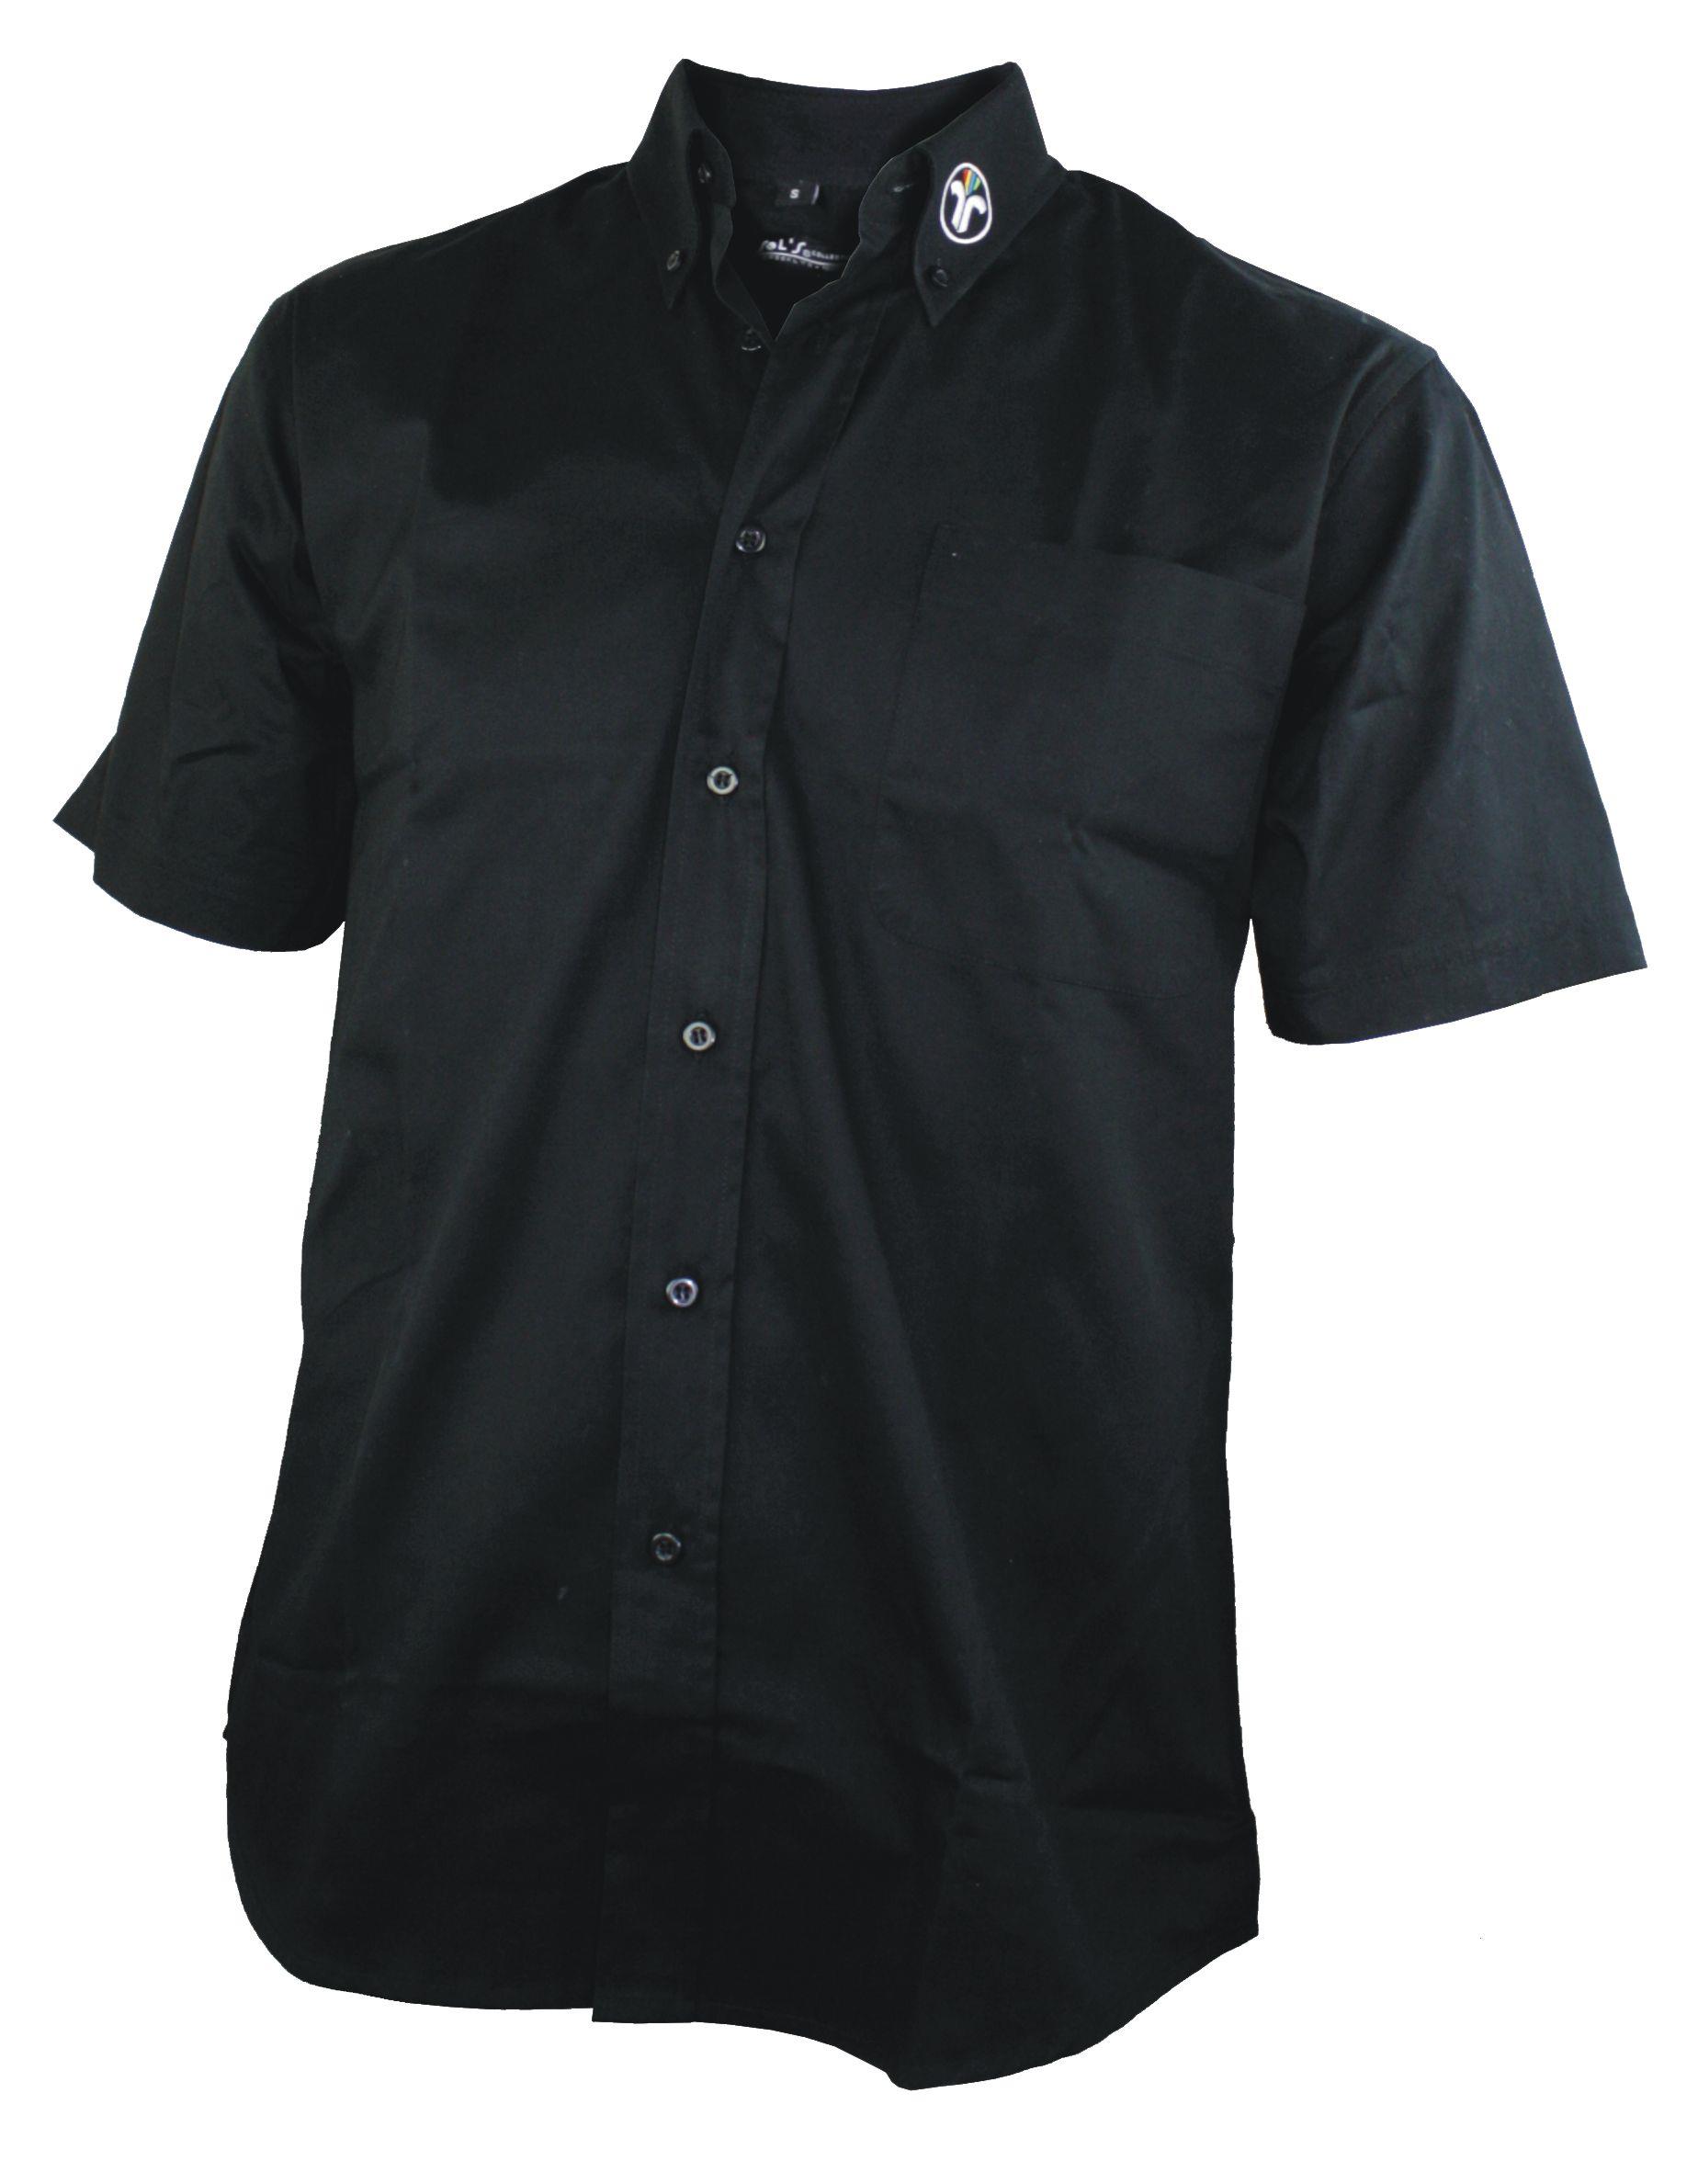 Baumwoll-Hemd, schwarz, kurzarm